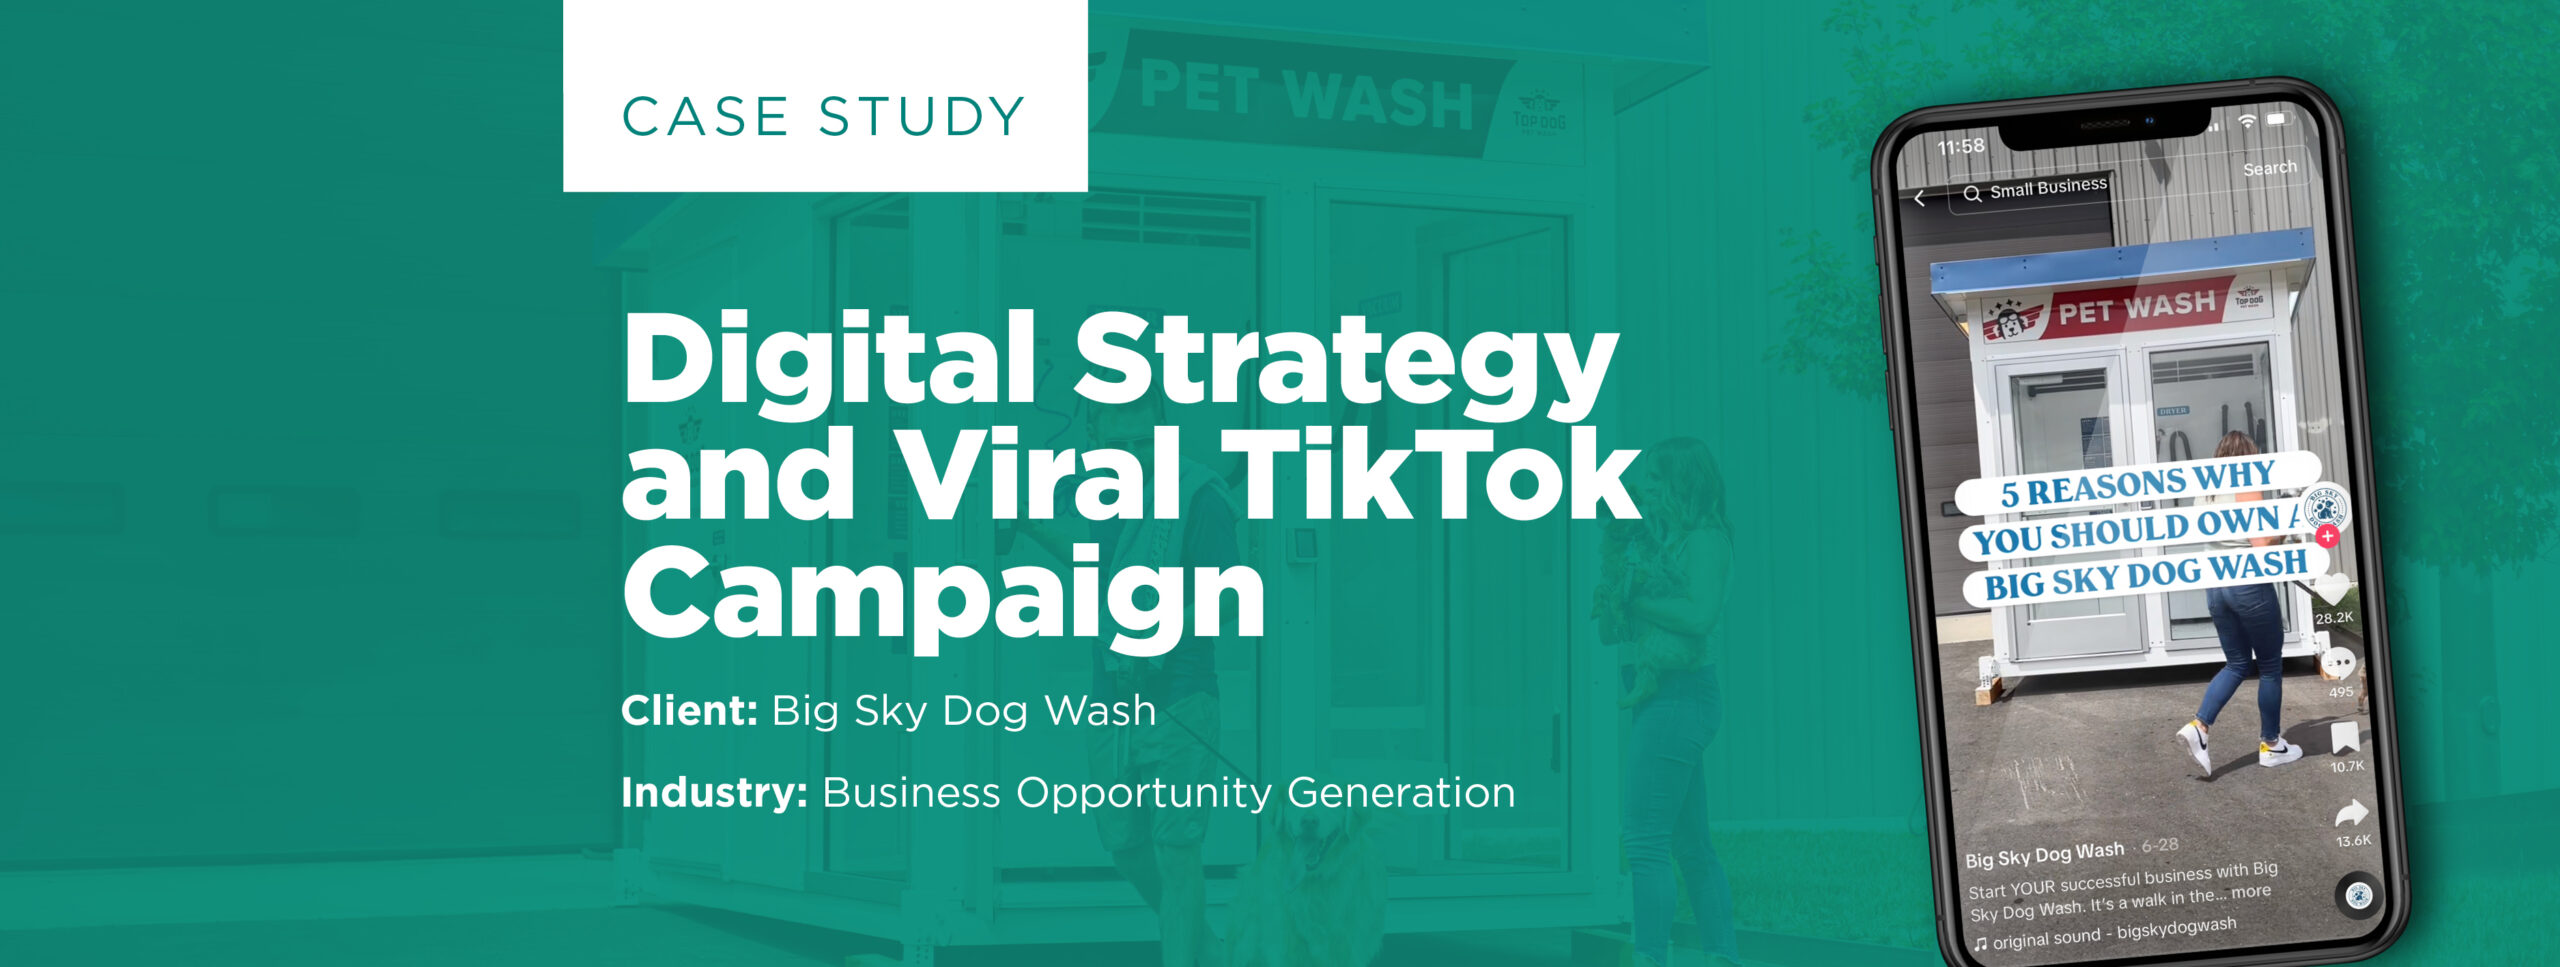 Viral TikTok Campaign